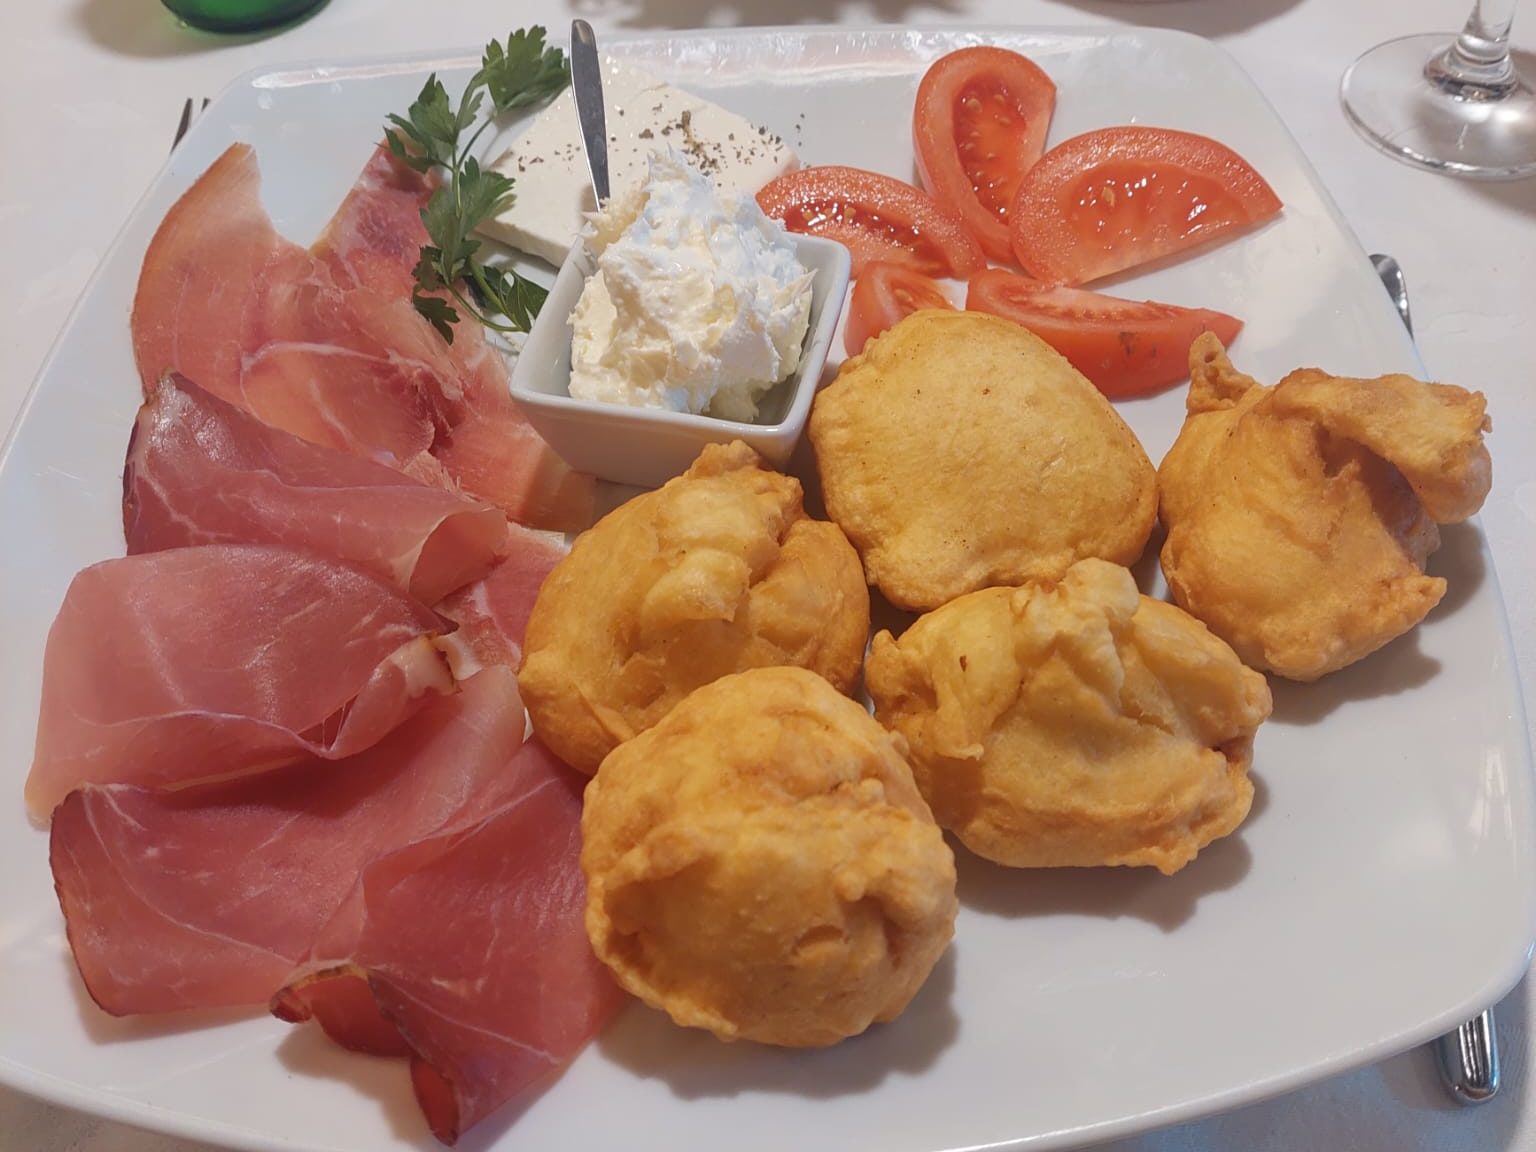 Uštipci at restaurant Gigo, one of the great breakfast spots in Zemun